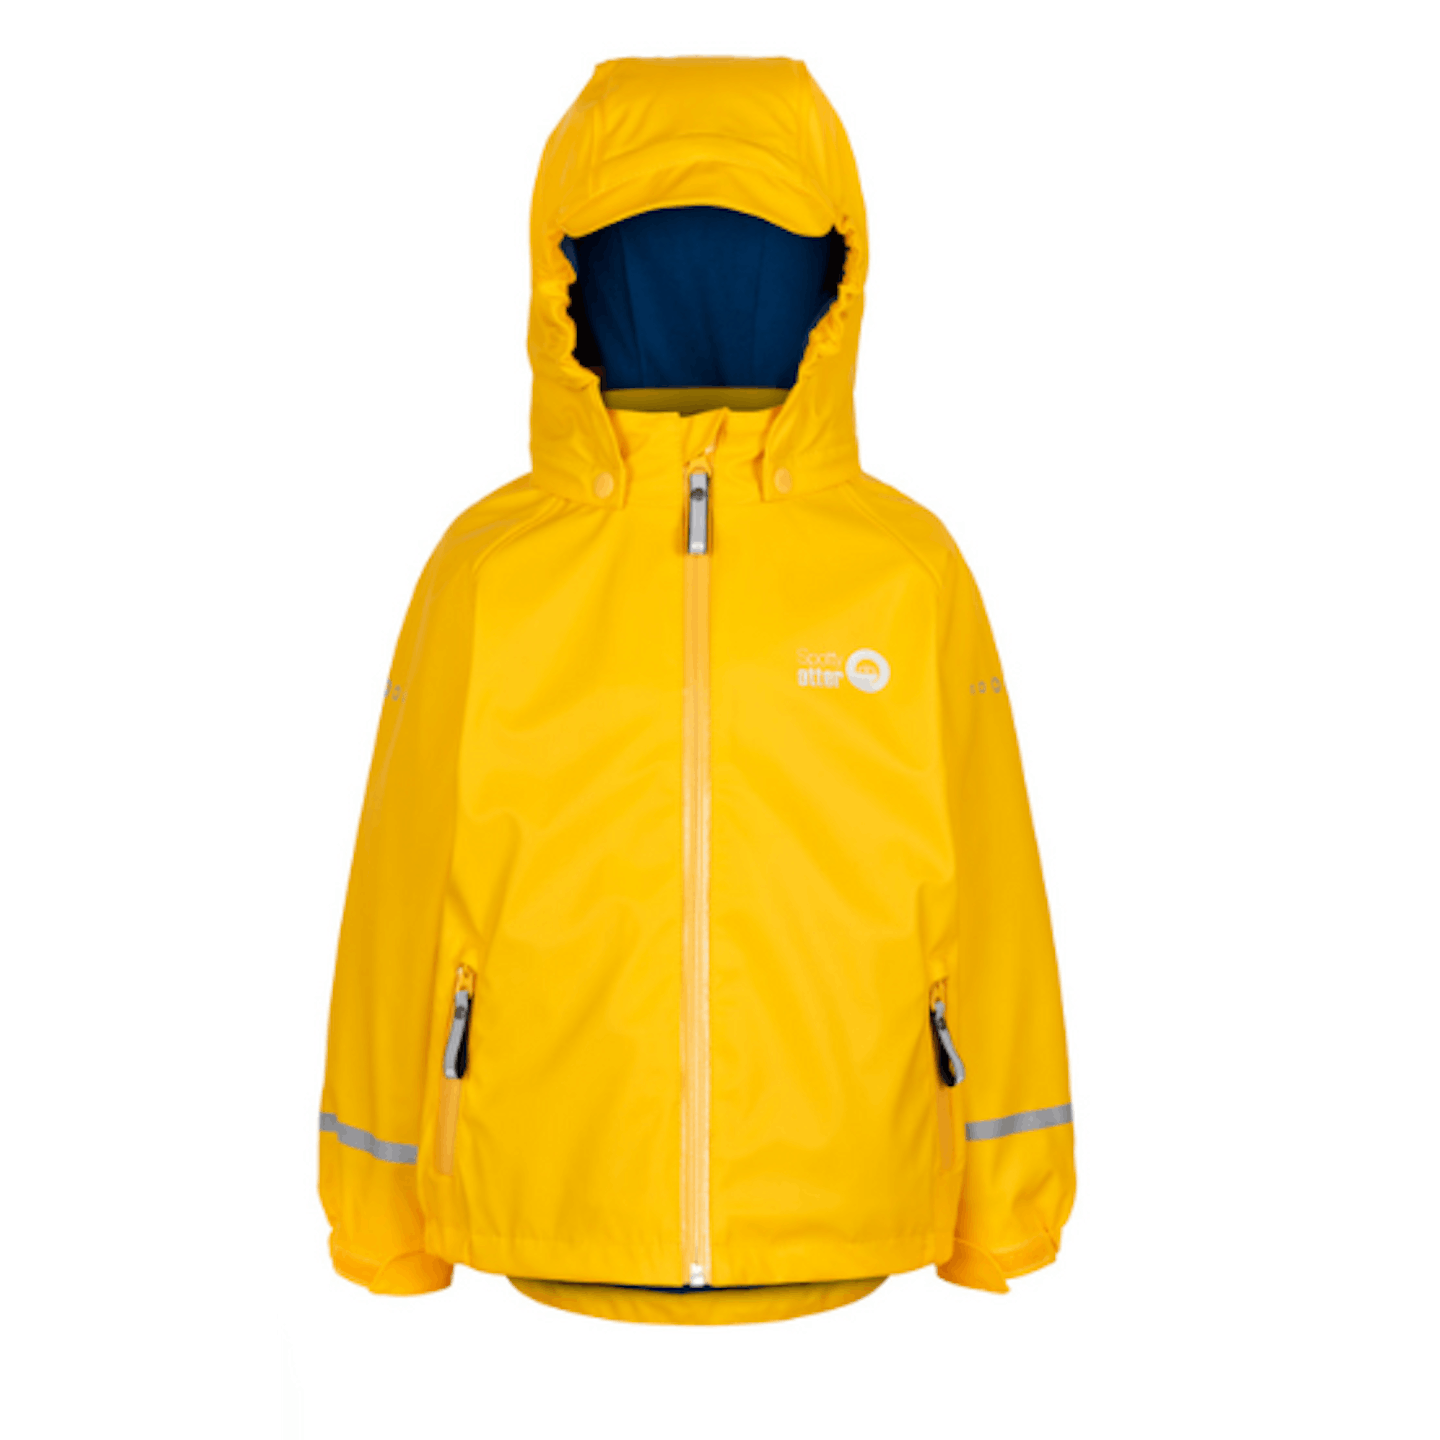 Best kids raincoats, waterproof jackets and coats